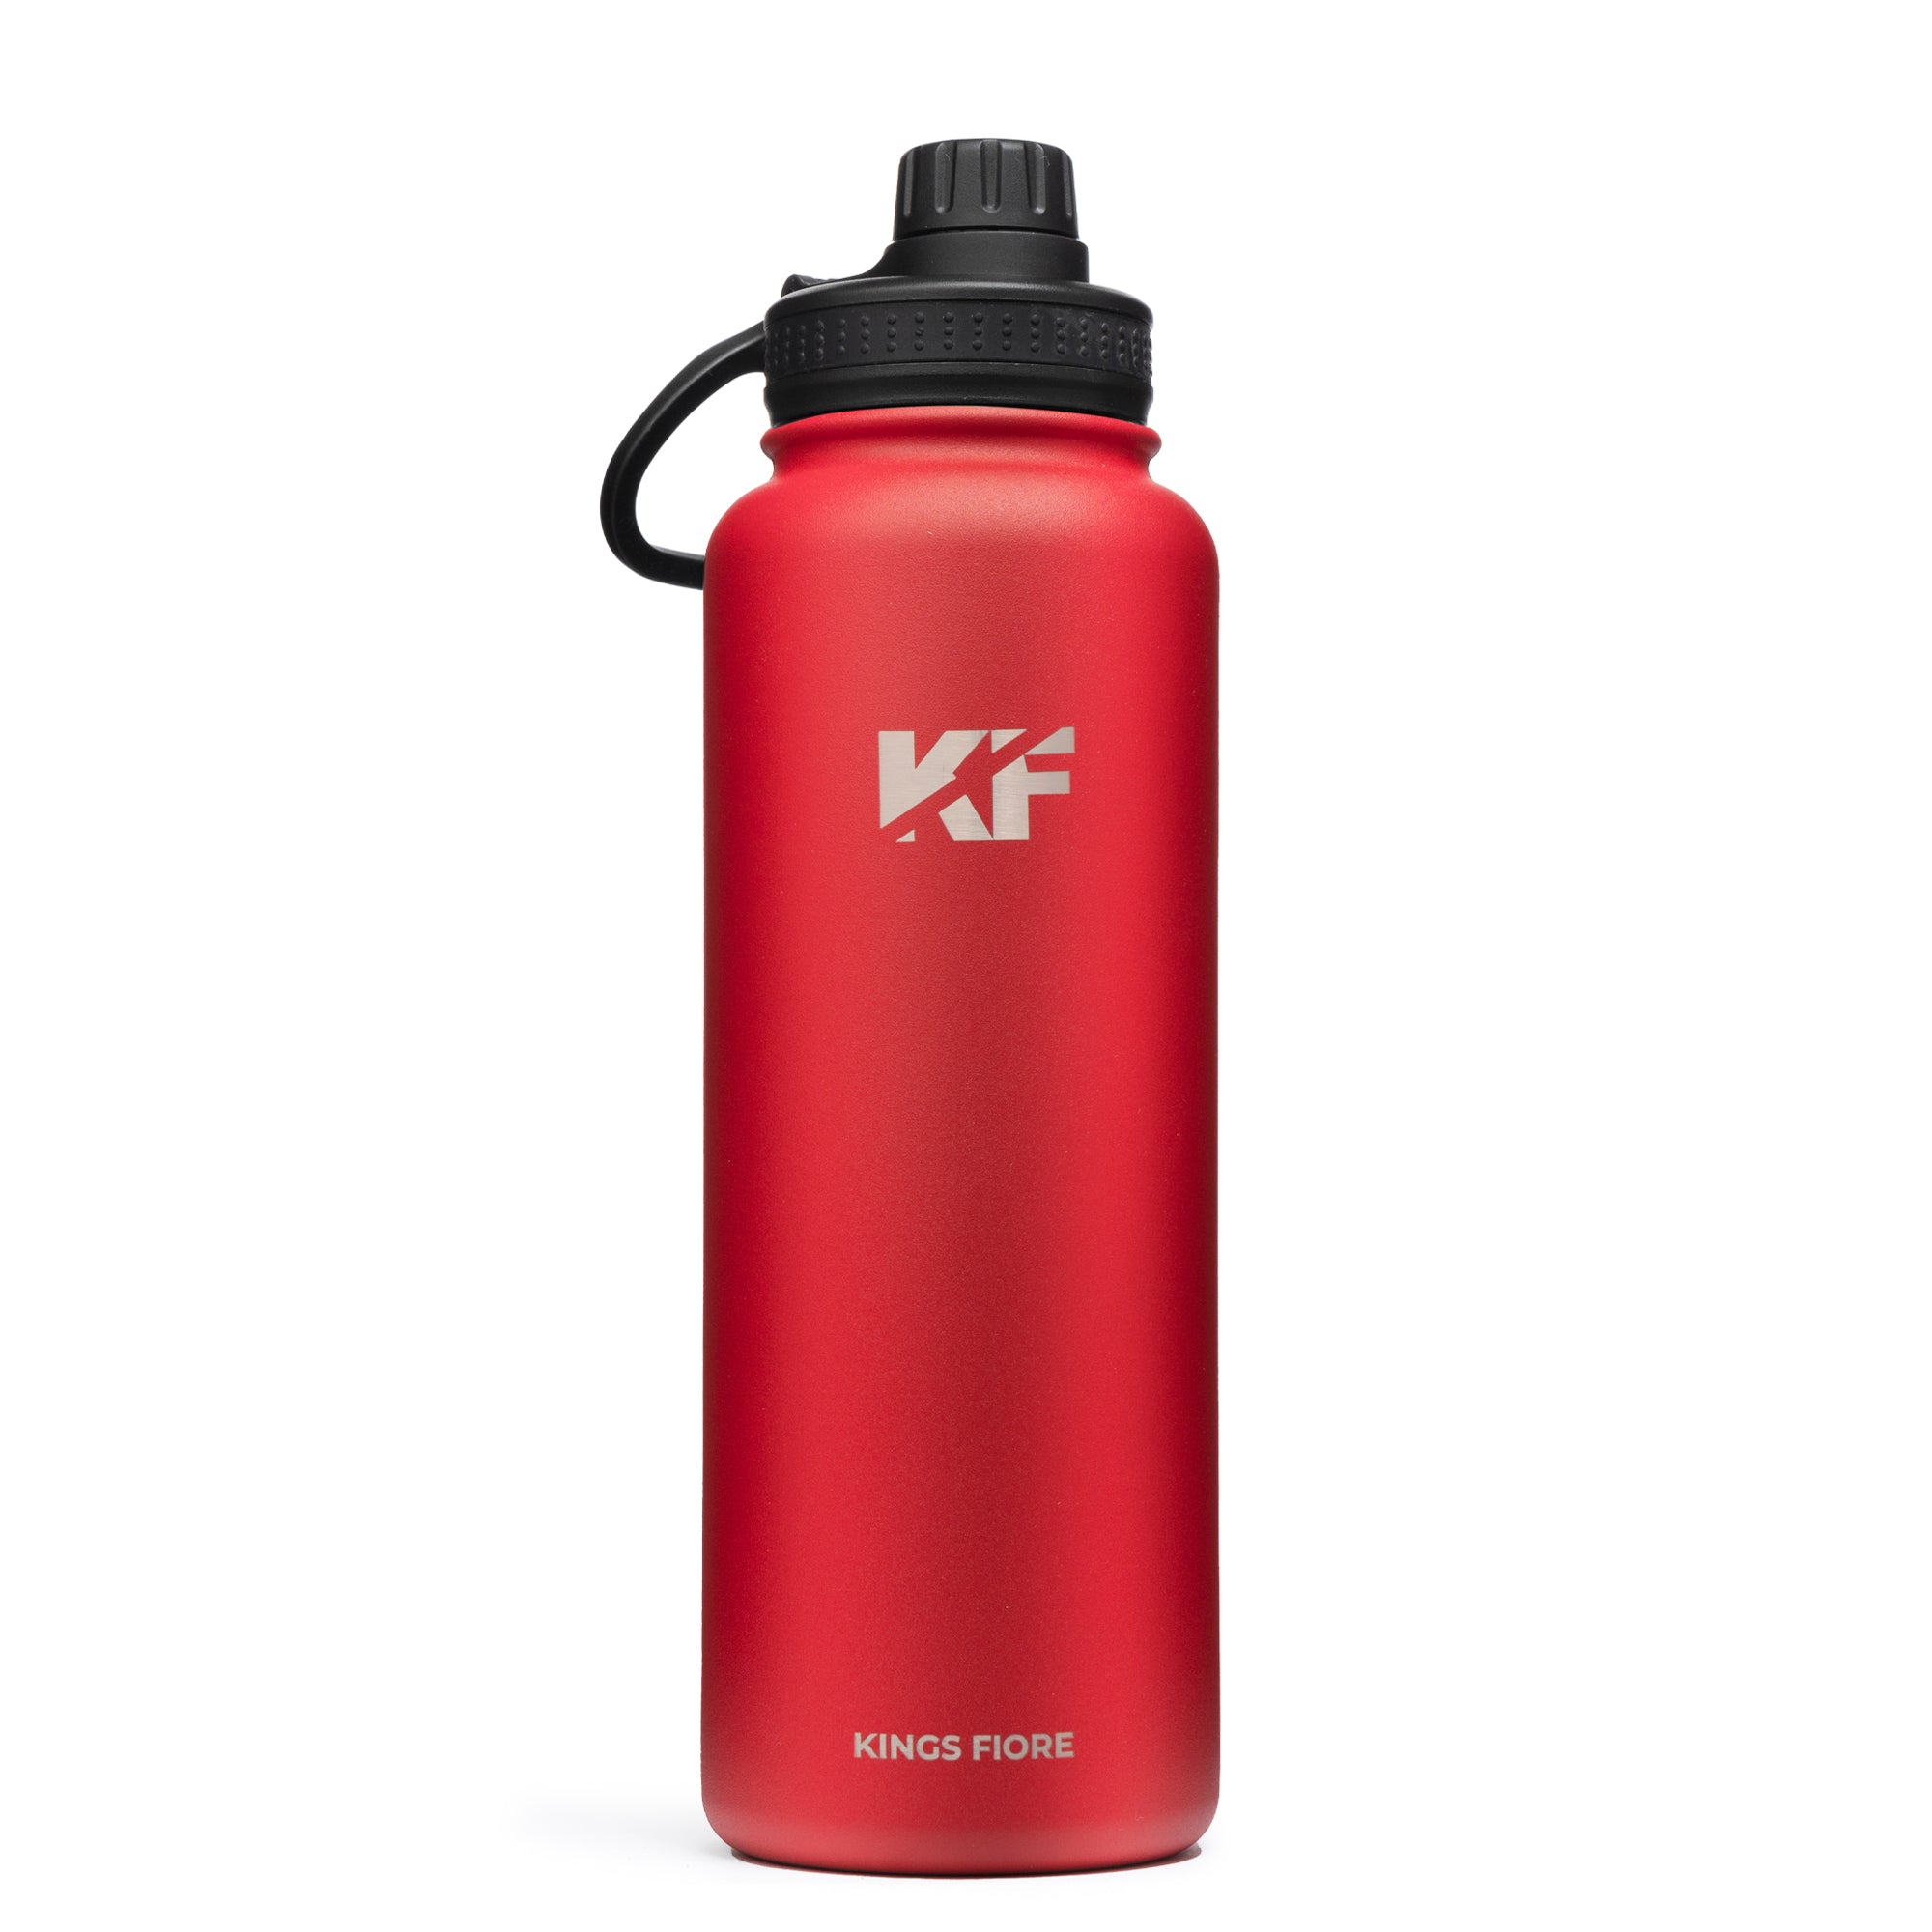 Kings Fiore Stainless Steel Water Bottle  (40 oz, Fire Finch Red)